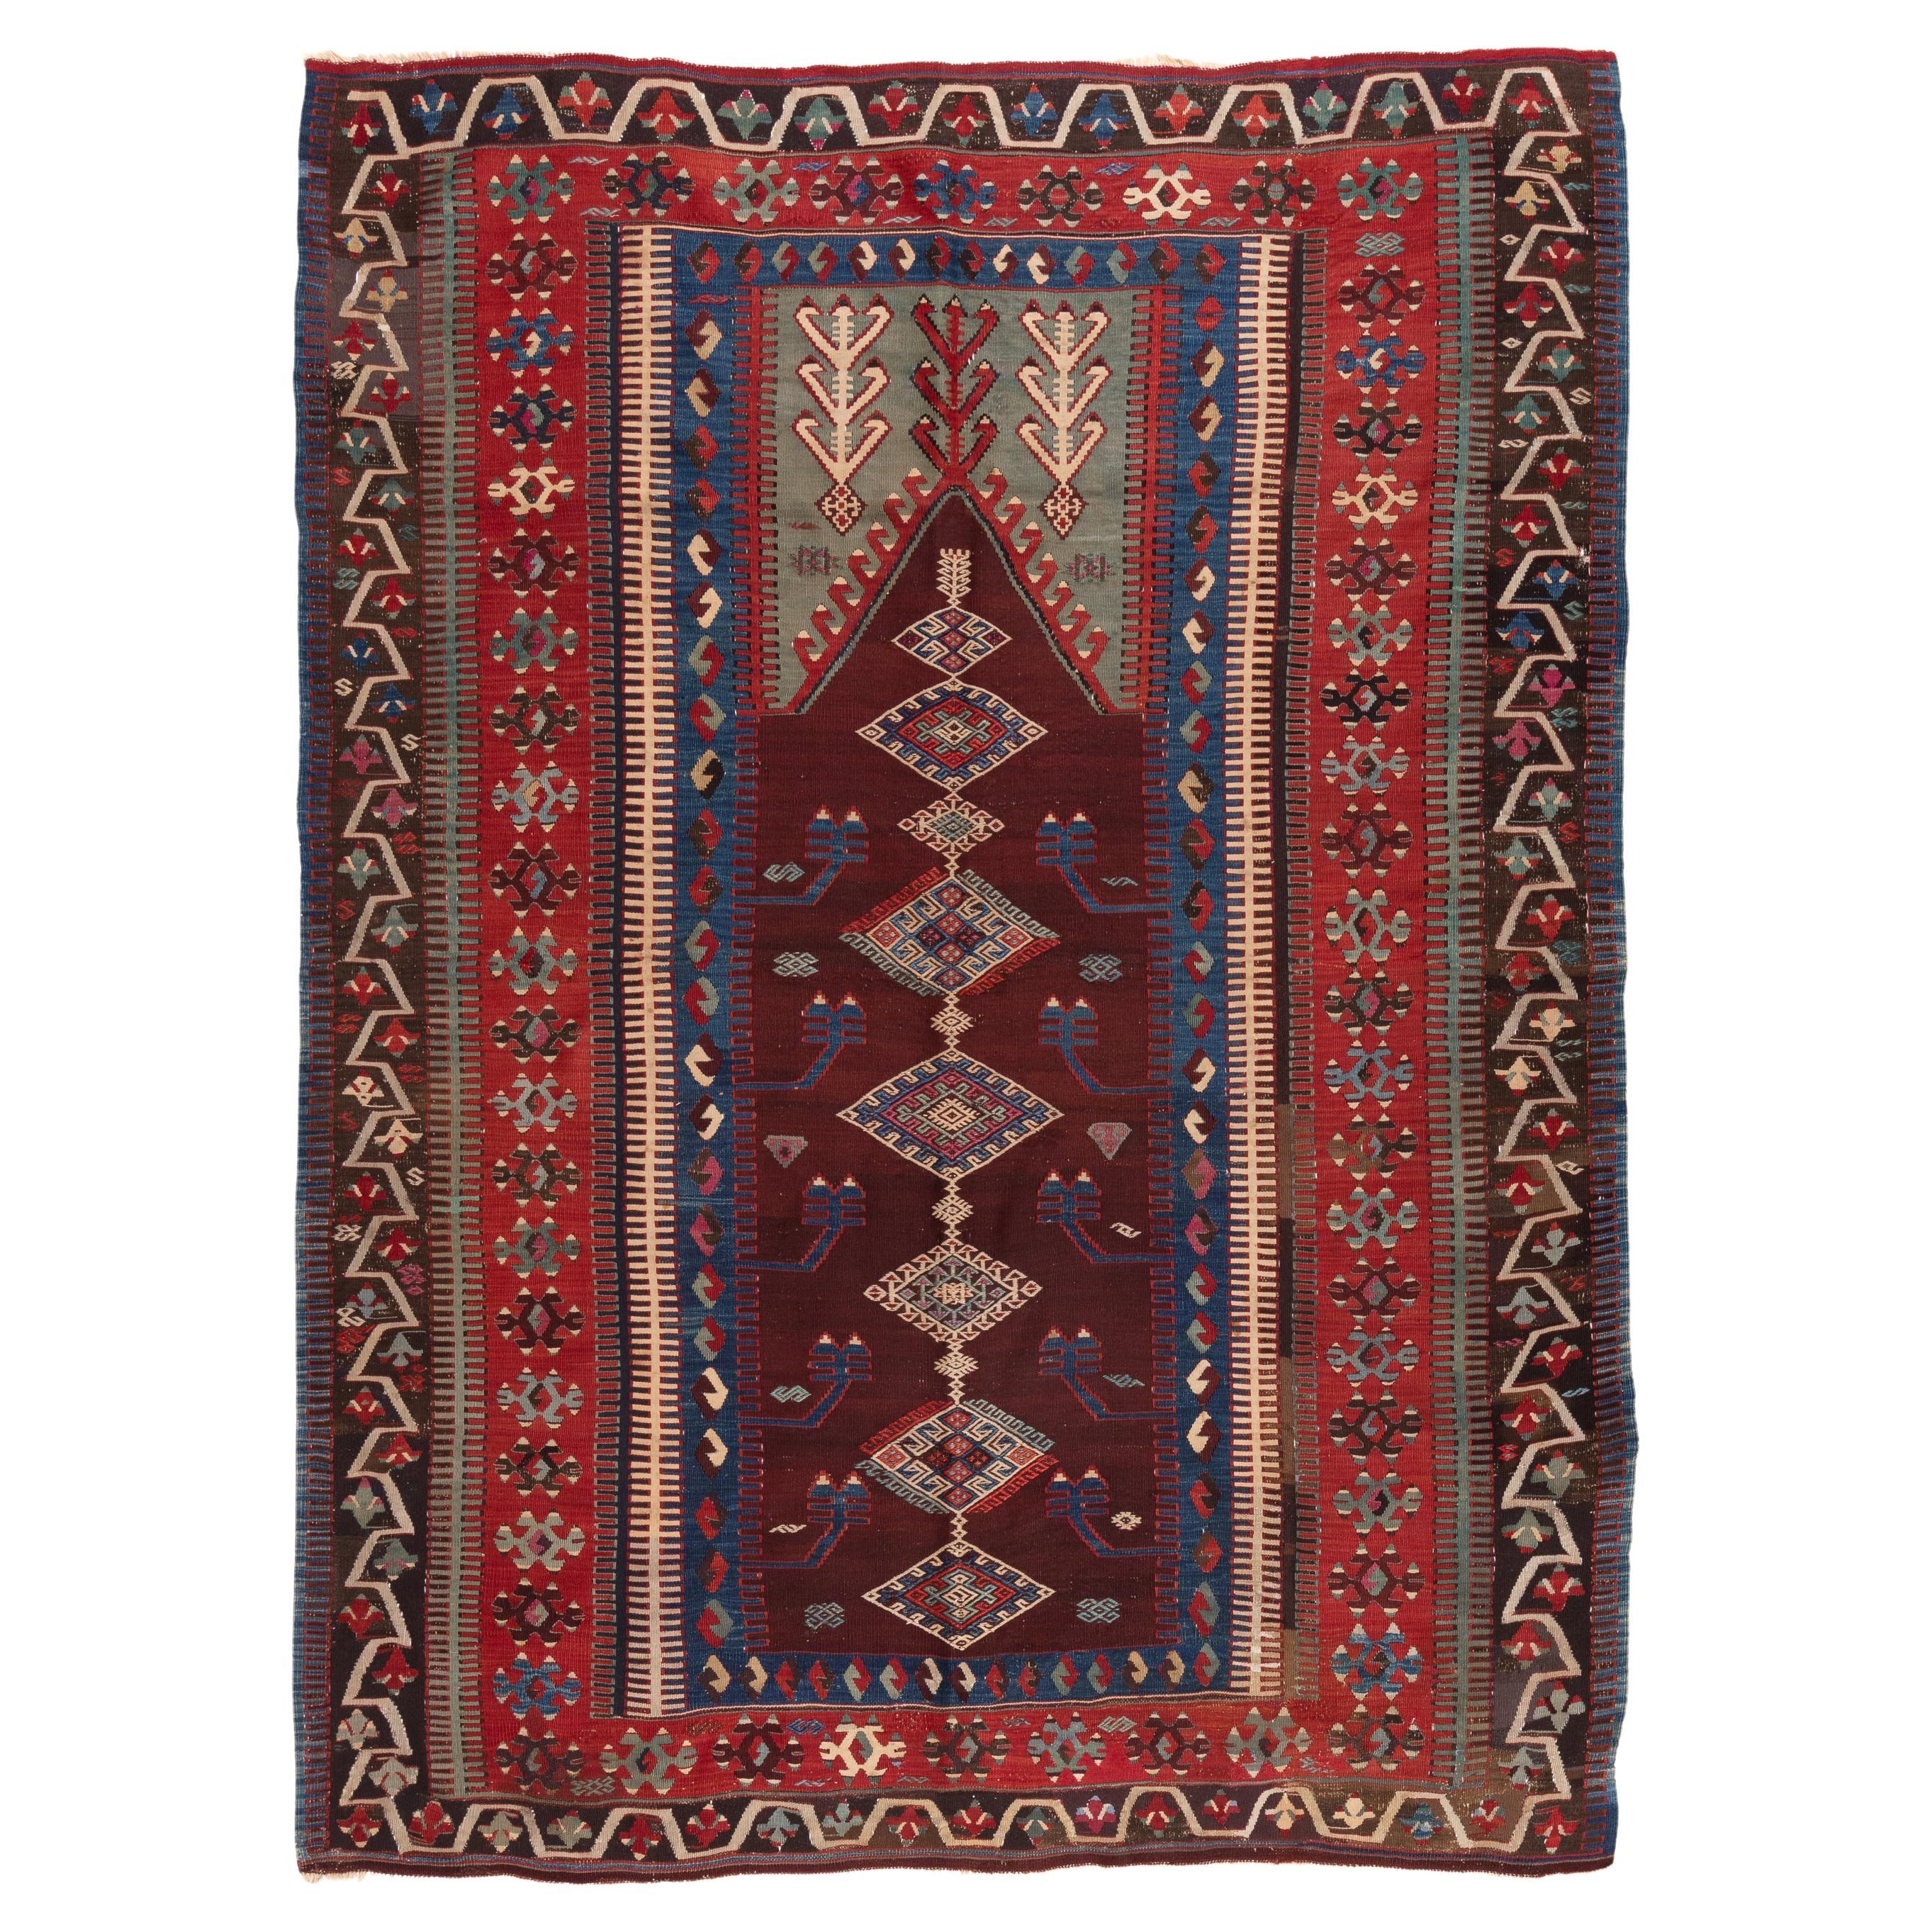 Antique Konya Obruk Kilim Central Anatolian Rug Turkish Carpet Rare Purple Color